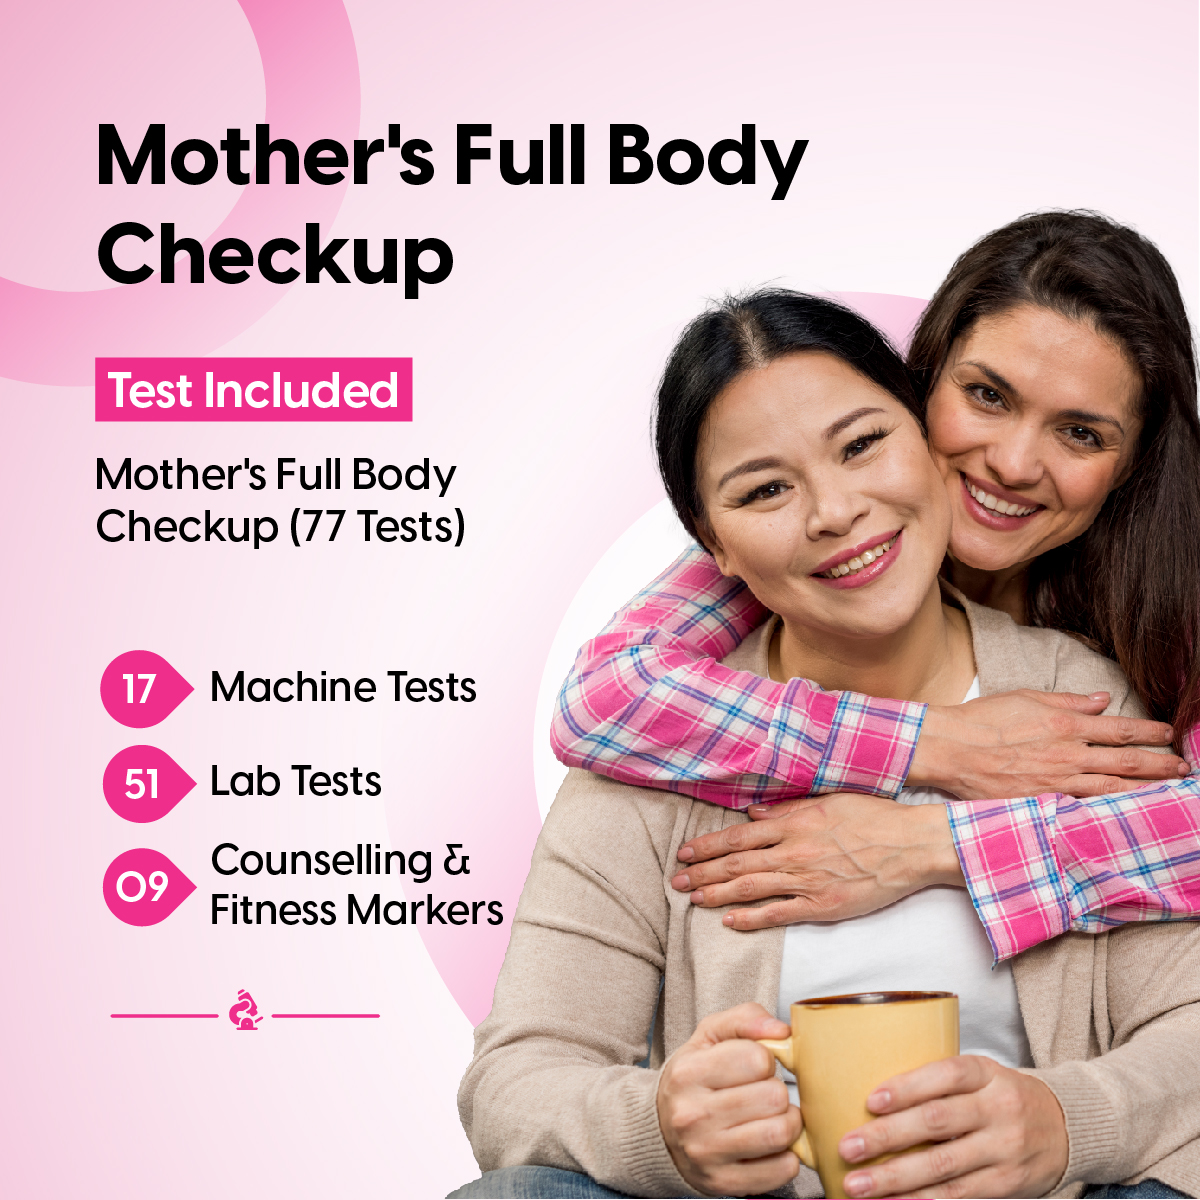 Mother's Full Body Checkup